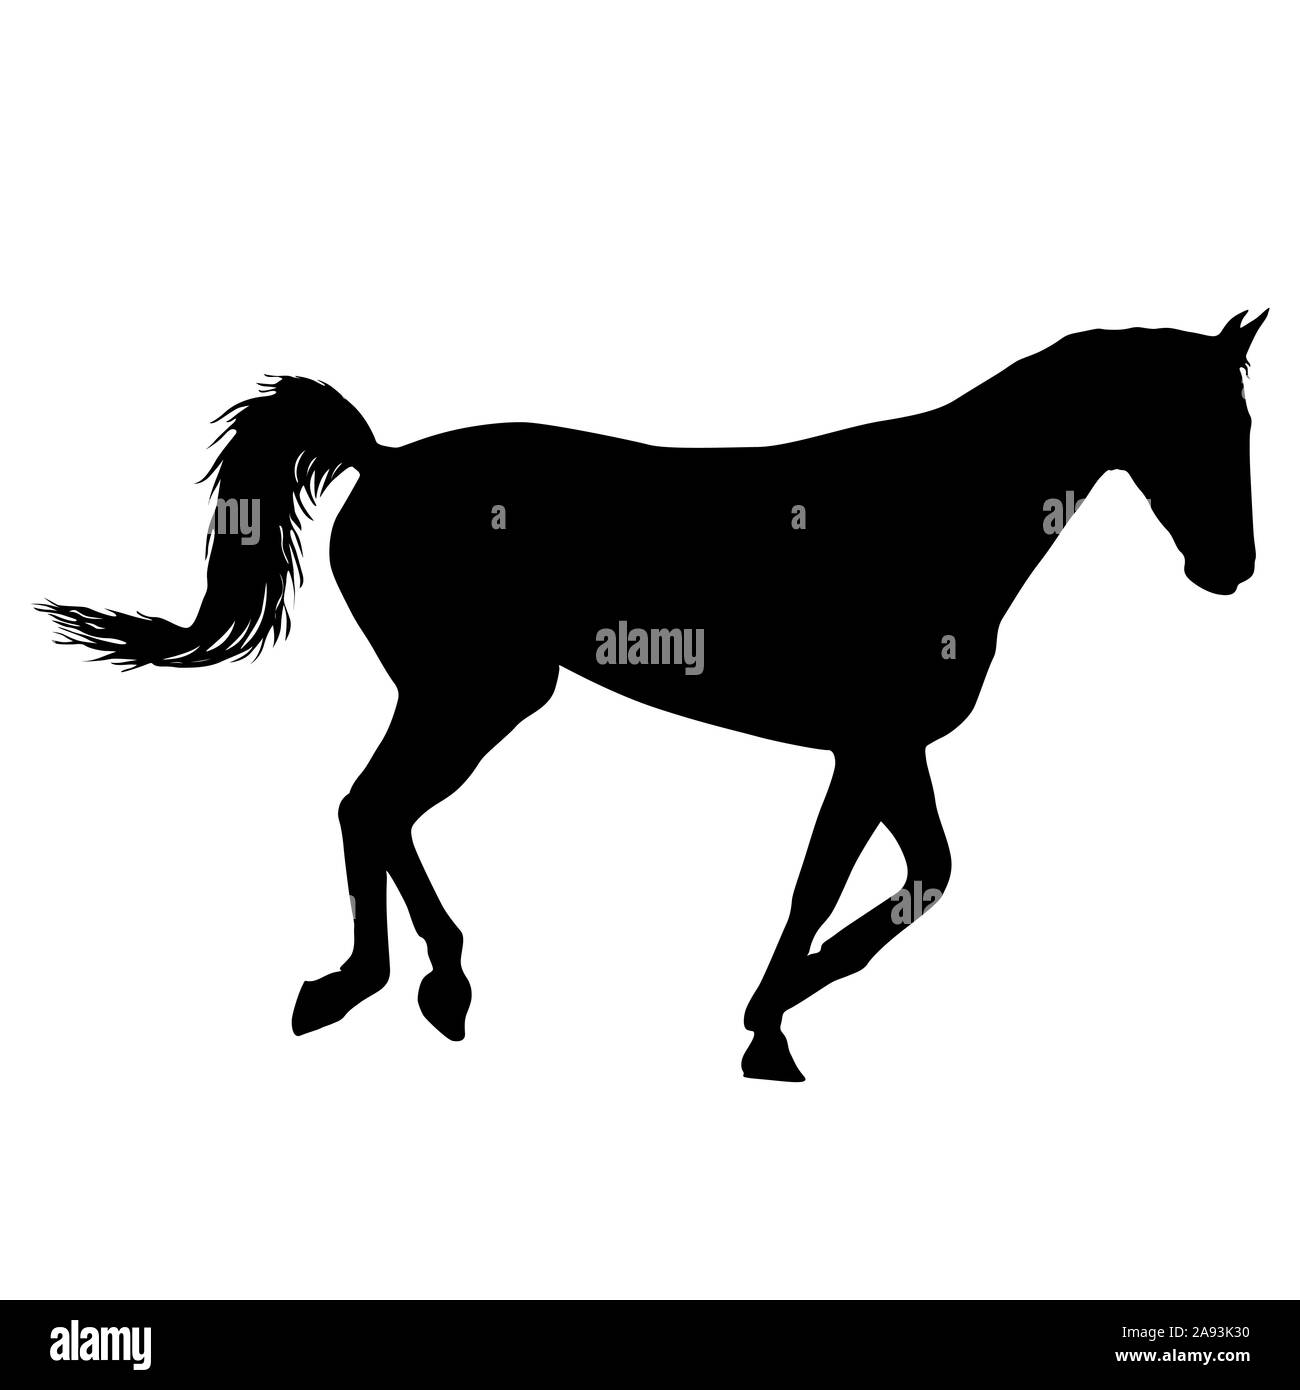 Animal silhouette of black mustang horse illustration. Stock Photo